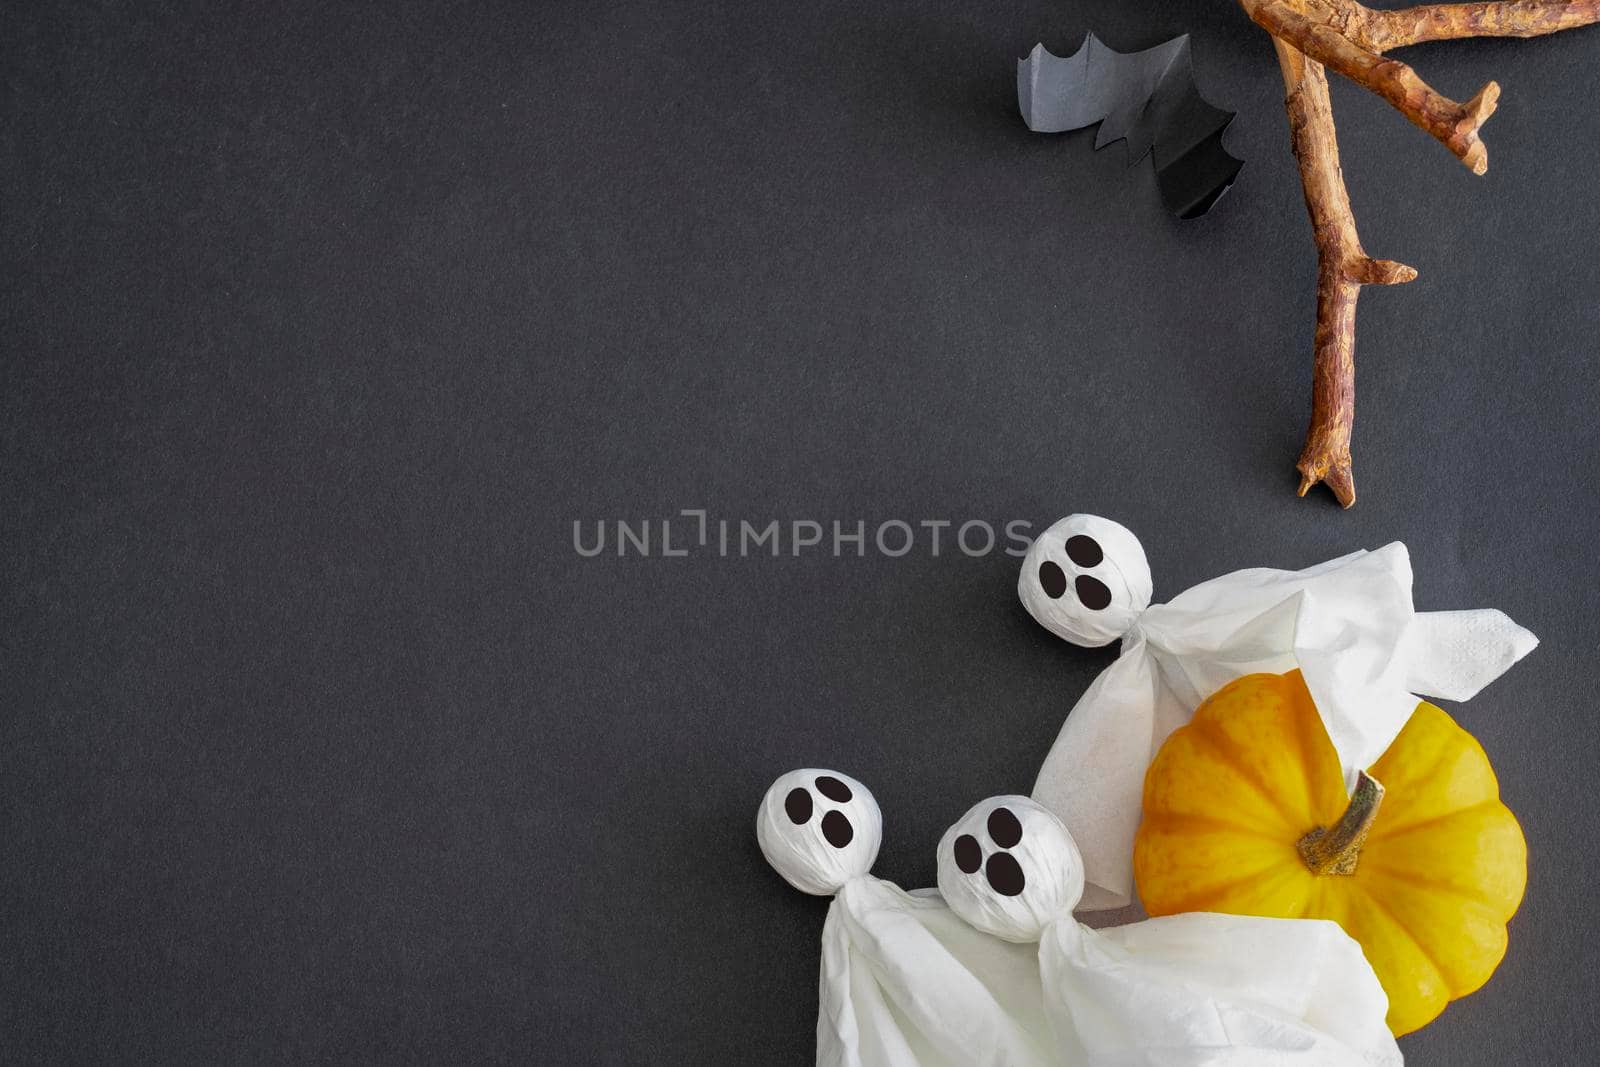 Ghosts, bat, pumpkin on black background. Concept Halloween. Copy space. by Laguna781